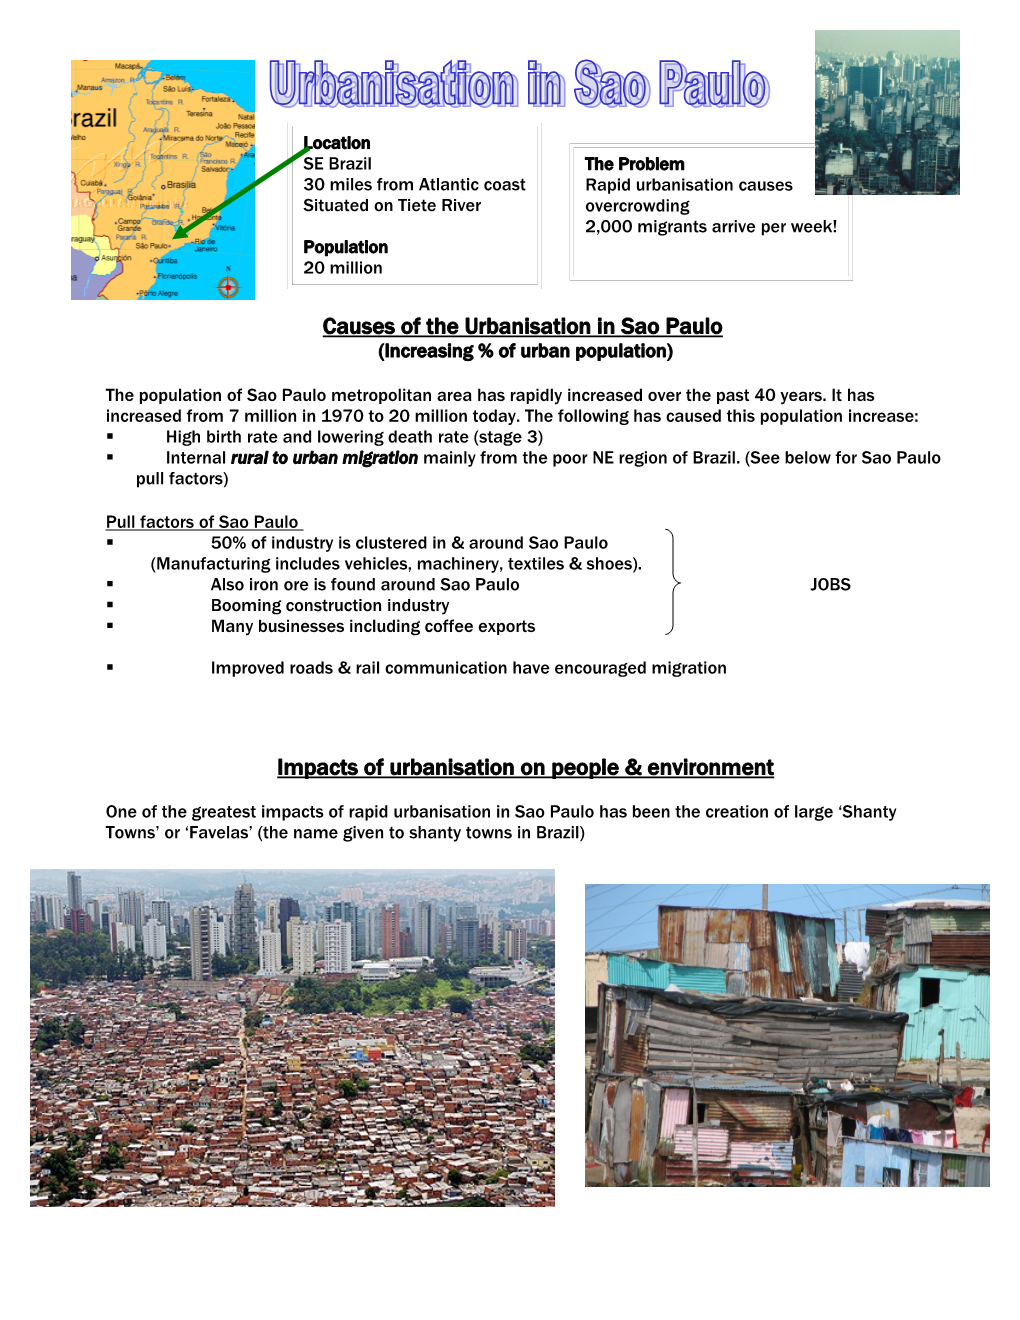 Causes of the Urbanisation in Sao Paulo